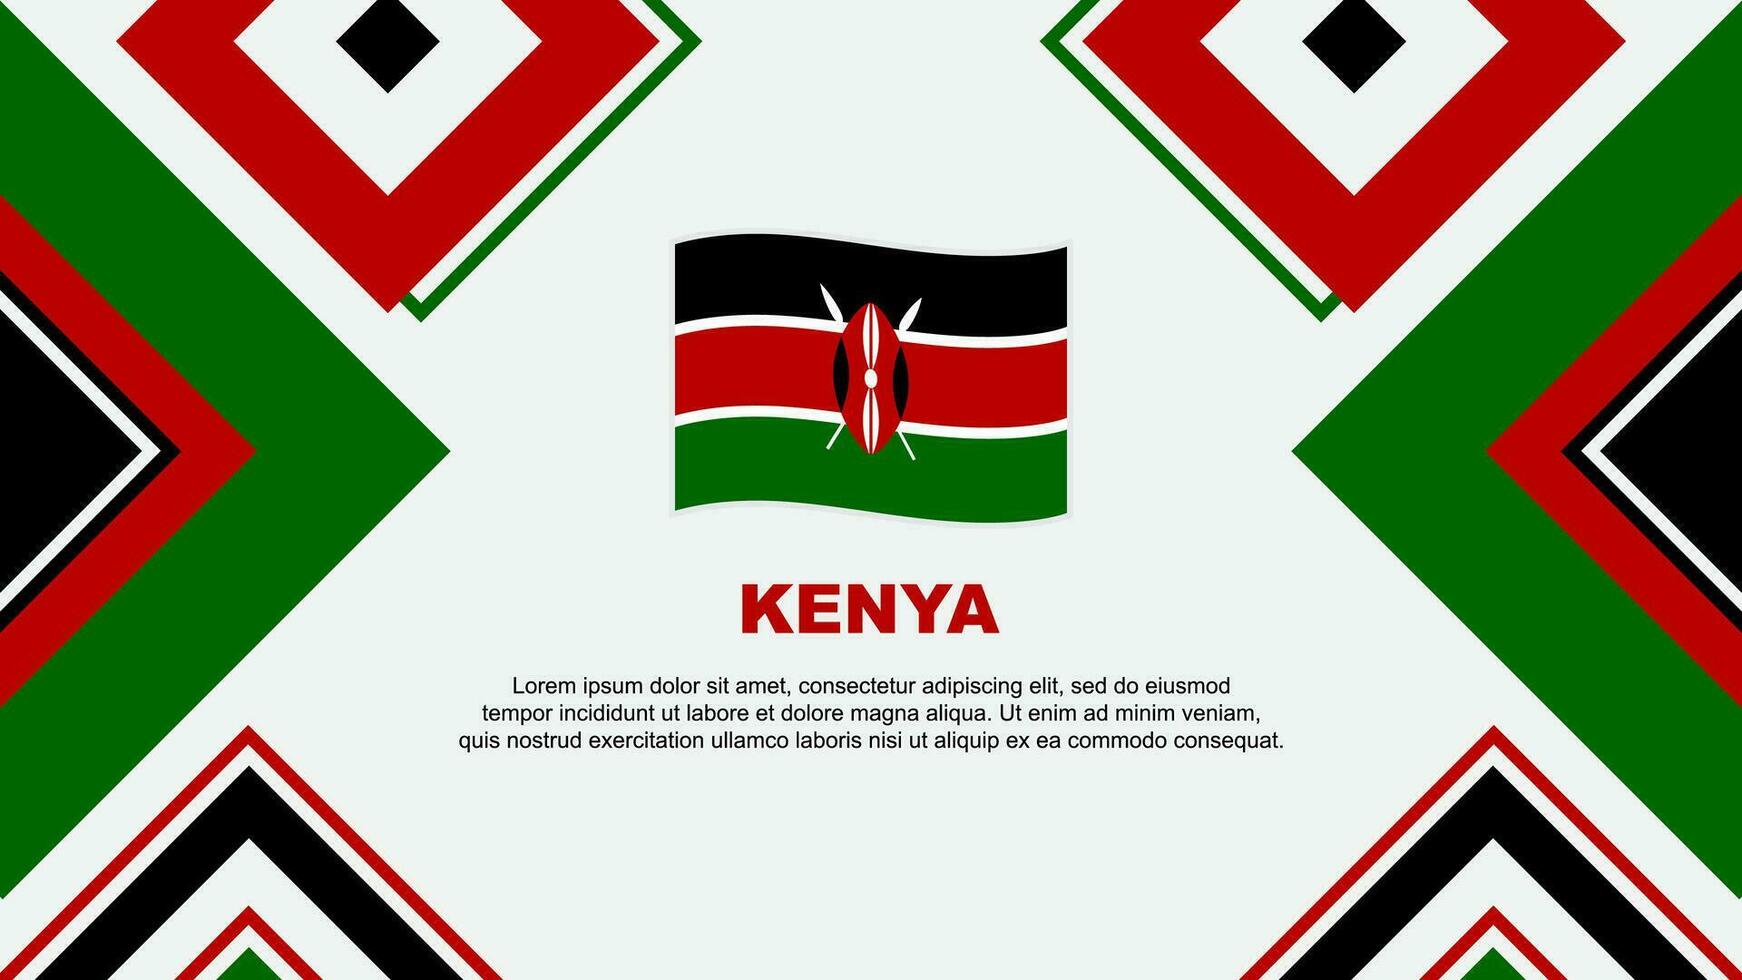 Kenya Flag Abstract Background Design Template. Kenya Independence Day Banner Wallpaper Vector Illustration. Kenya Independence Day